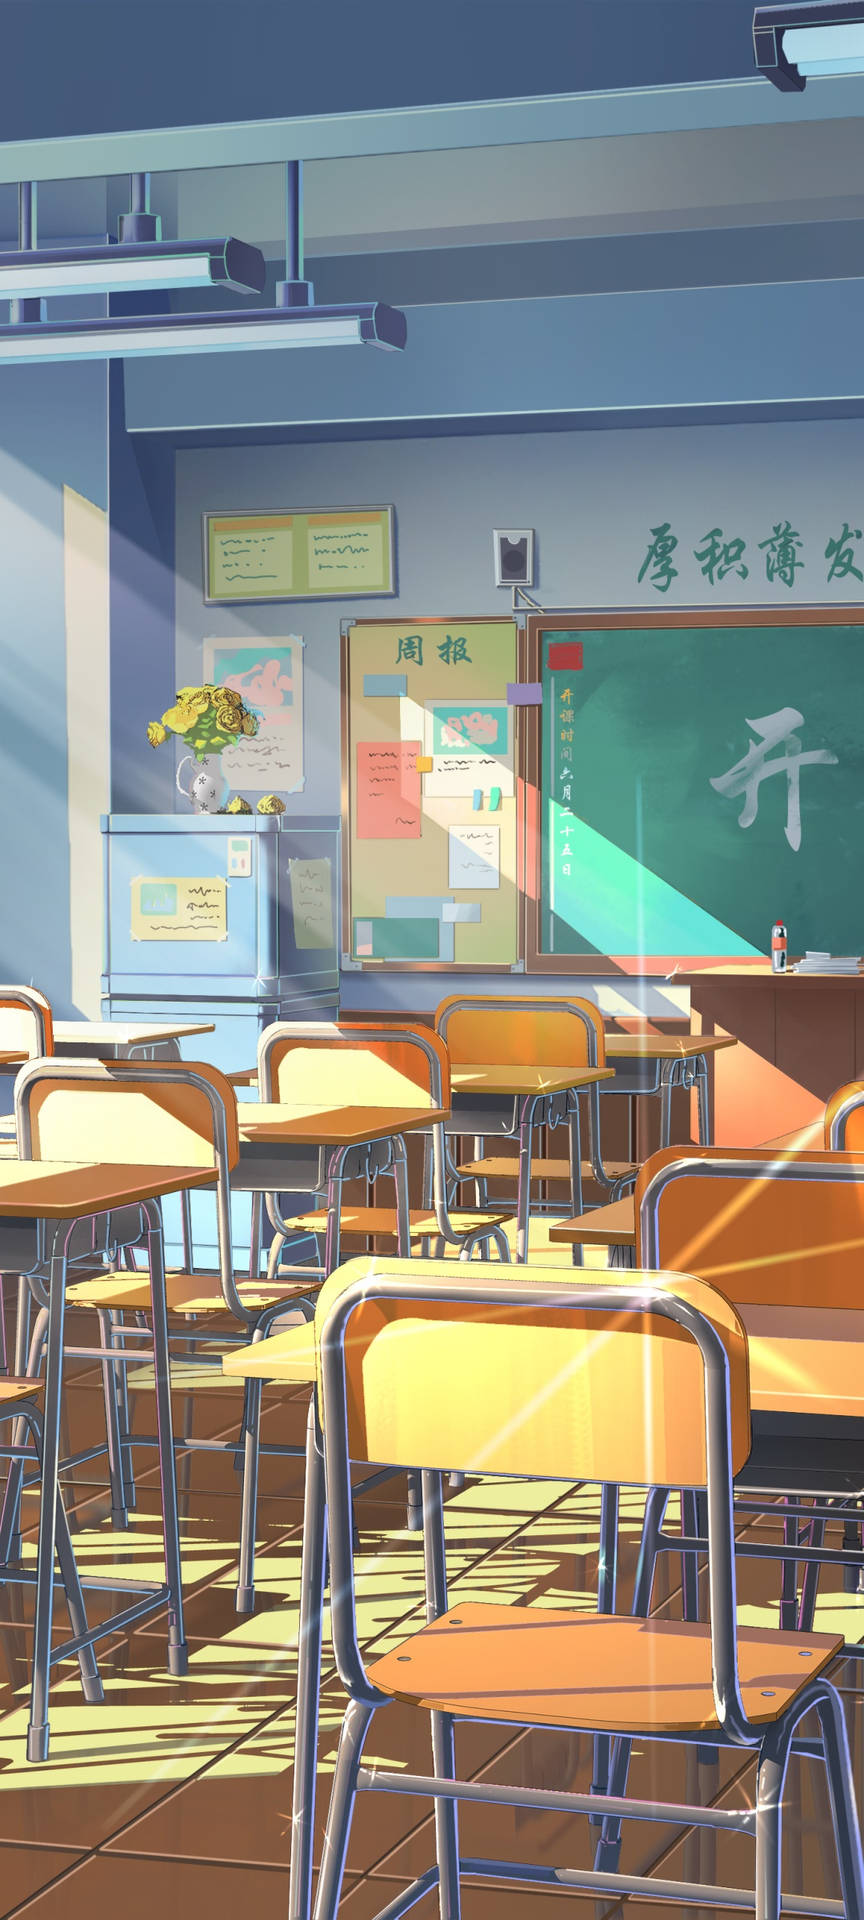 Sunlit Anime Classroom Wallpaper